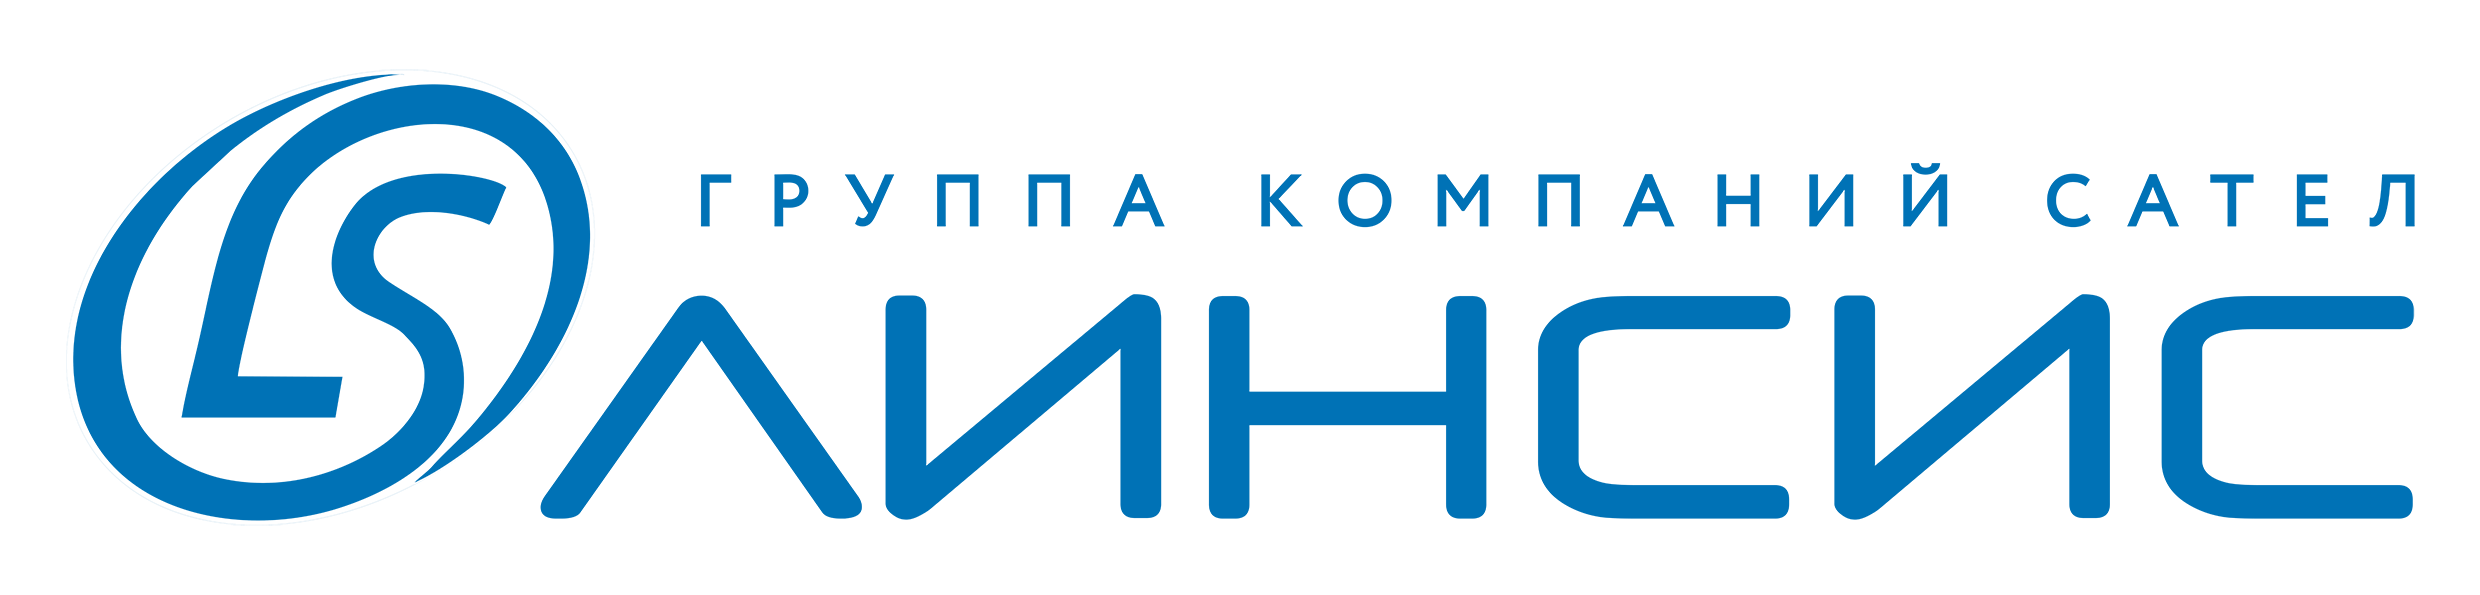 Логотип Линсис синий